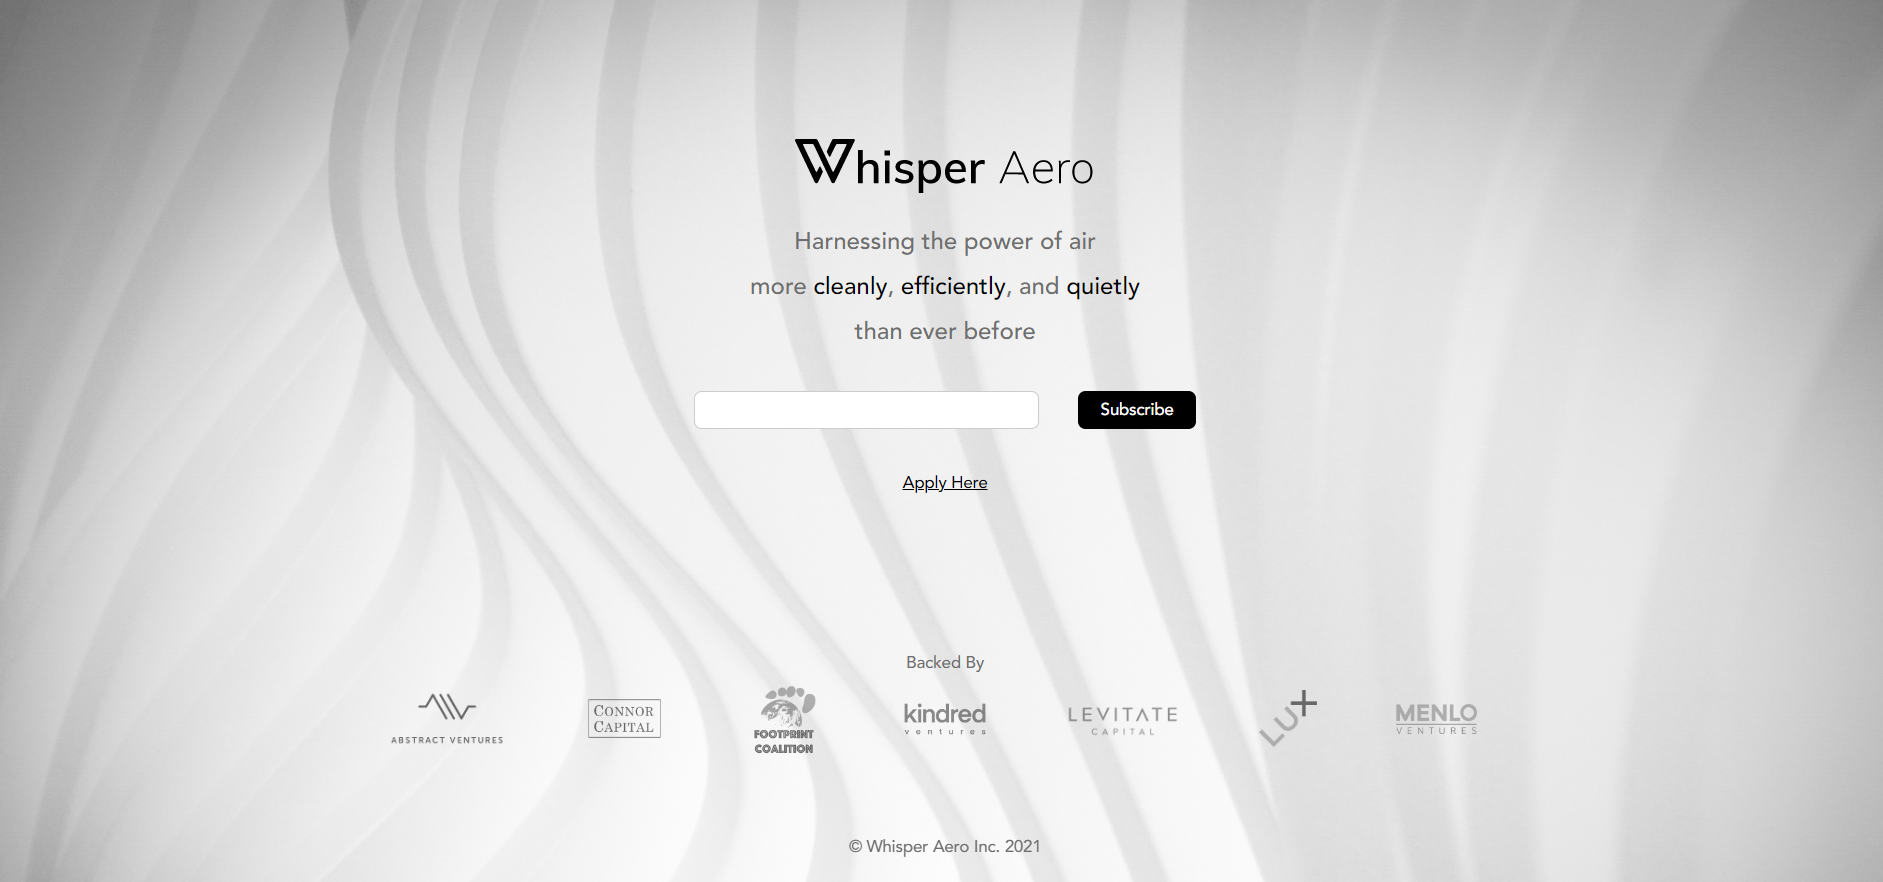 Whisper Aero Raises $32 Million in Series A Funding to Revolutionize Air Power